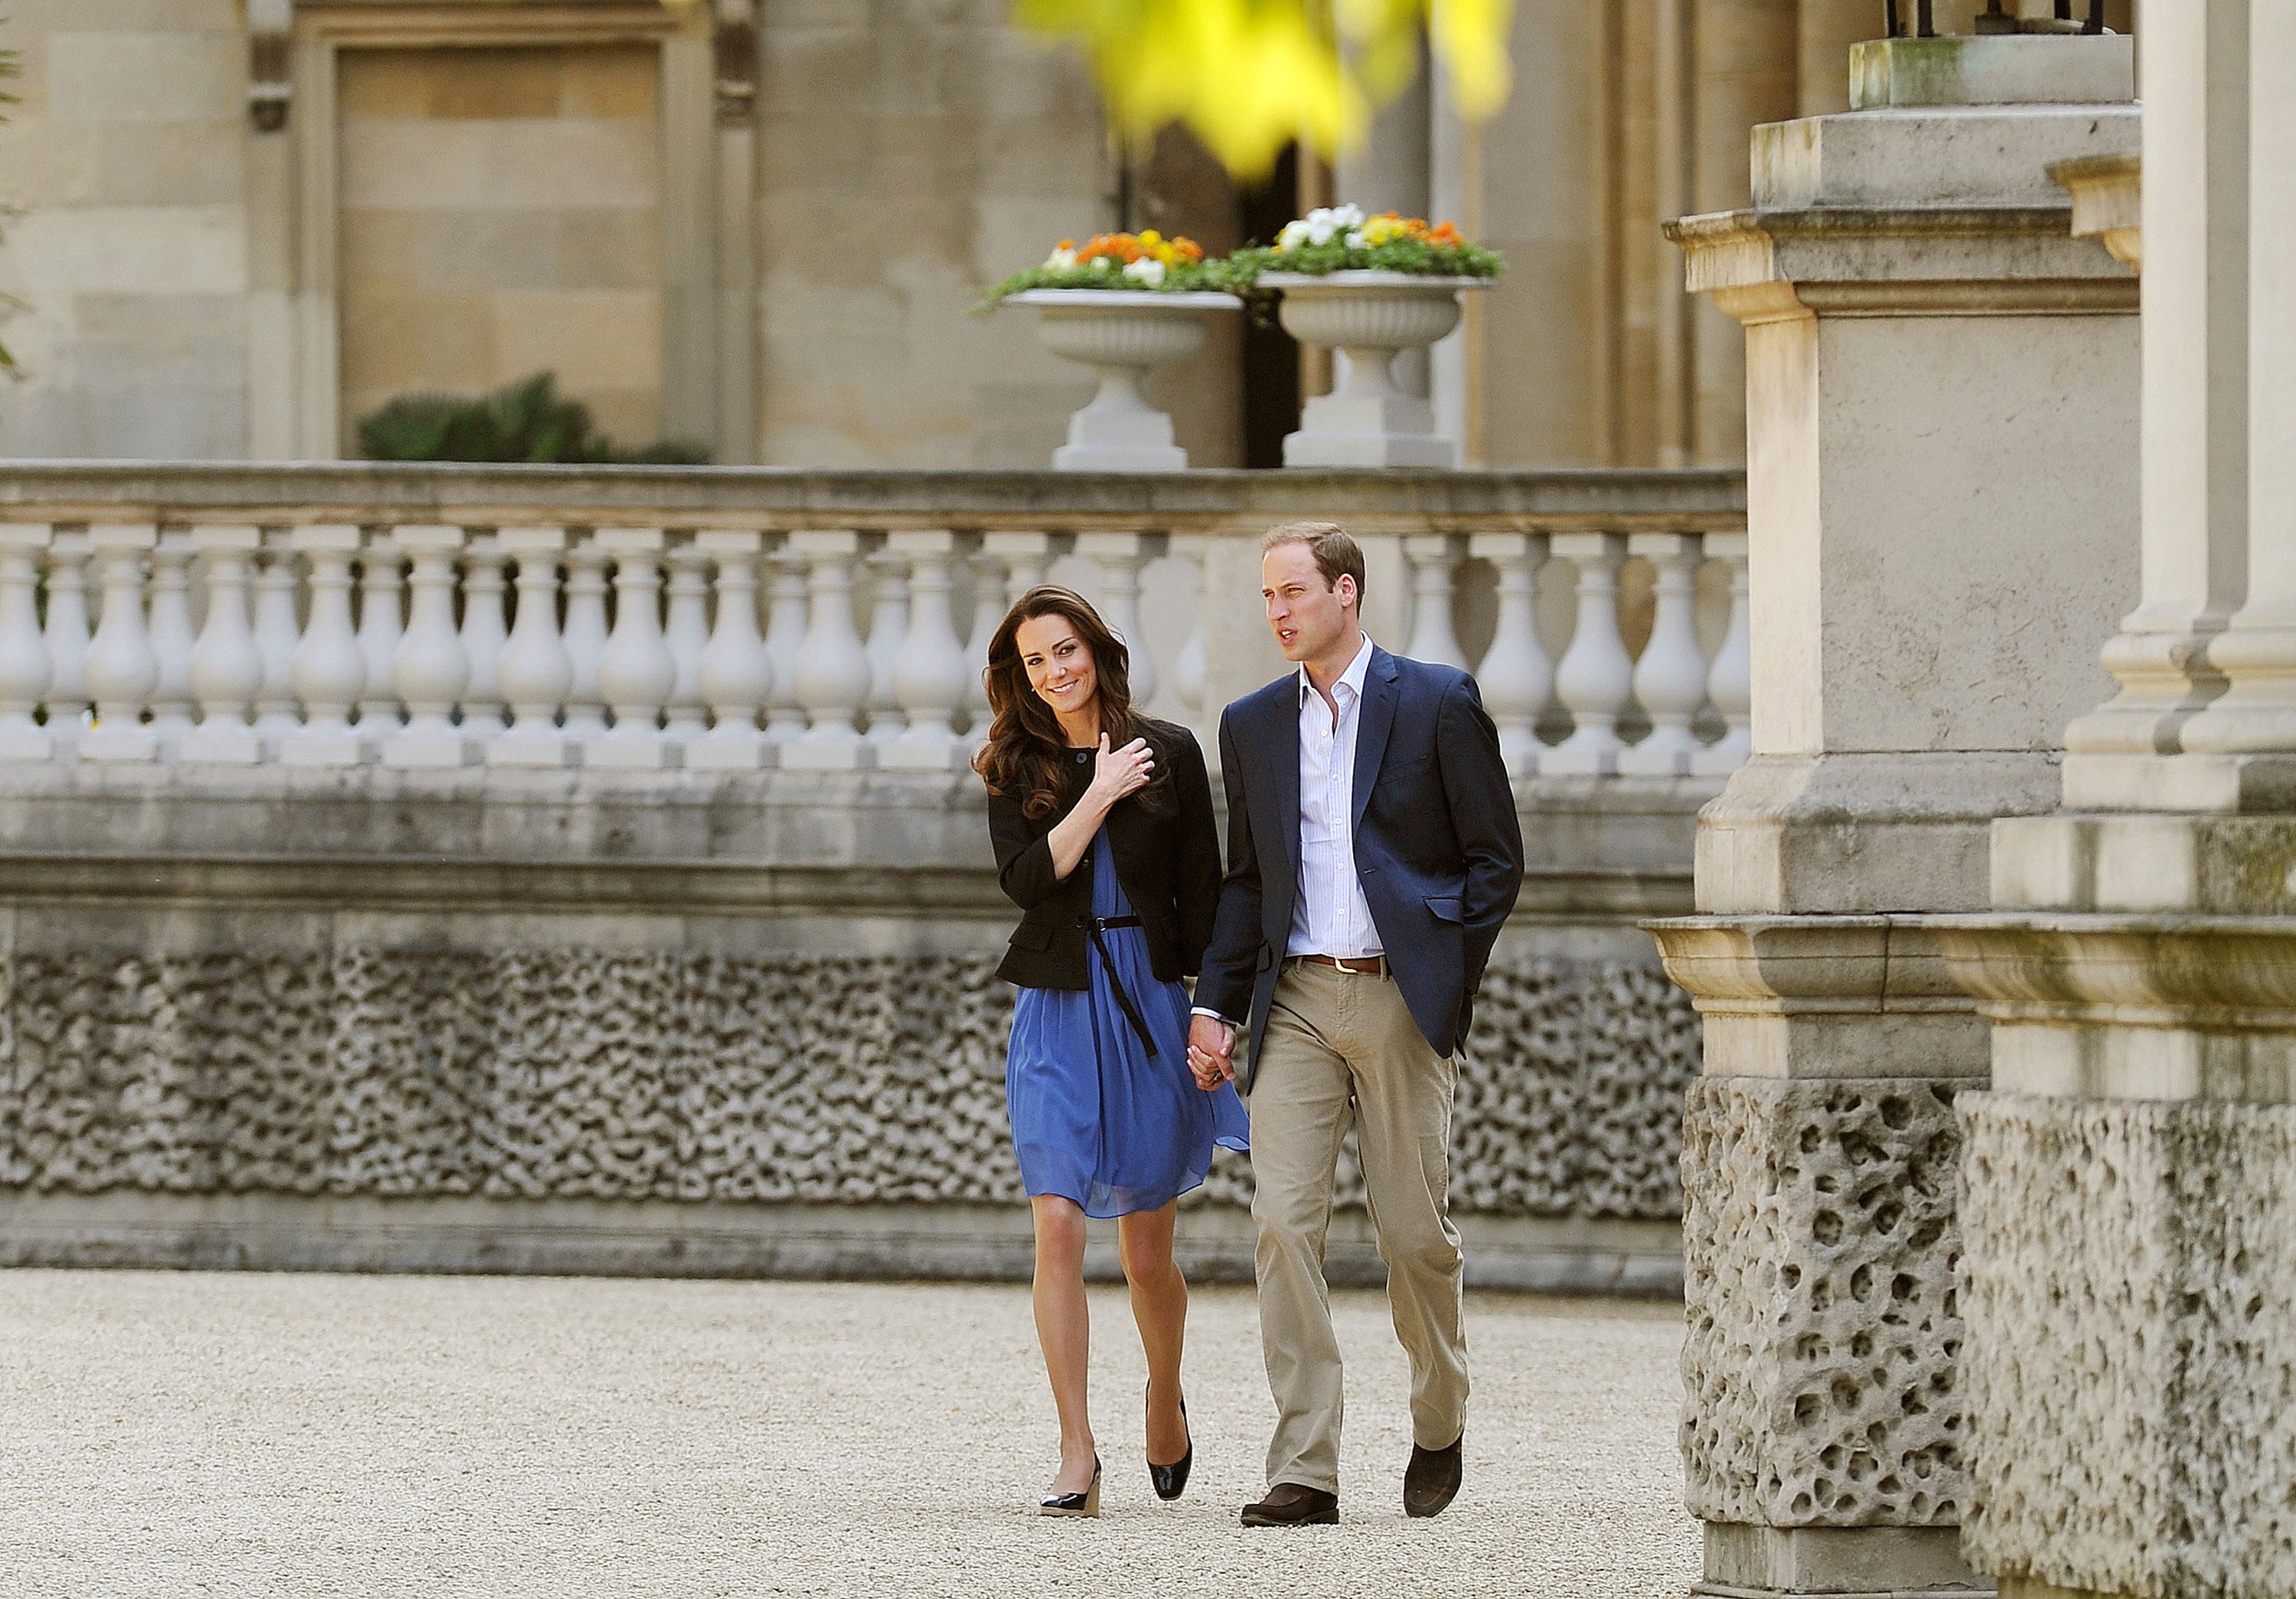 Prince William, Duke of Cambridge and Catherine, Duchess of Cambridge walk hand in hand from Buckingham Palace